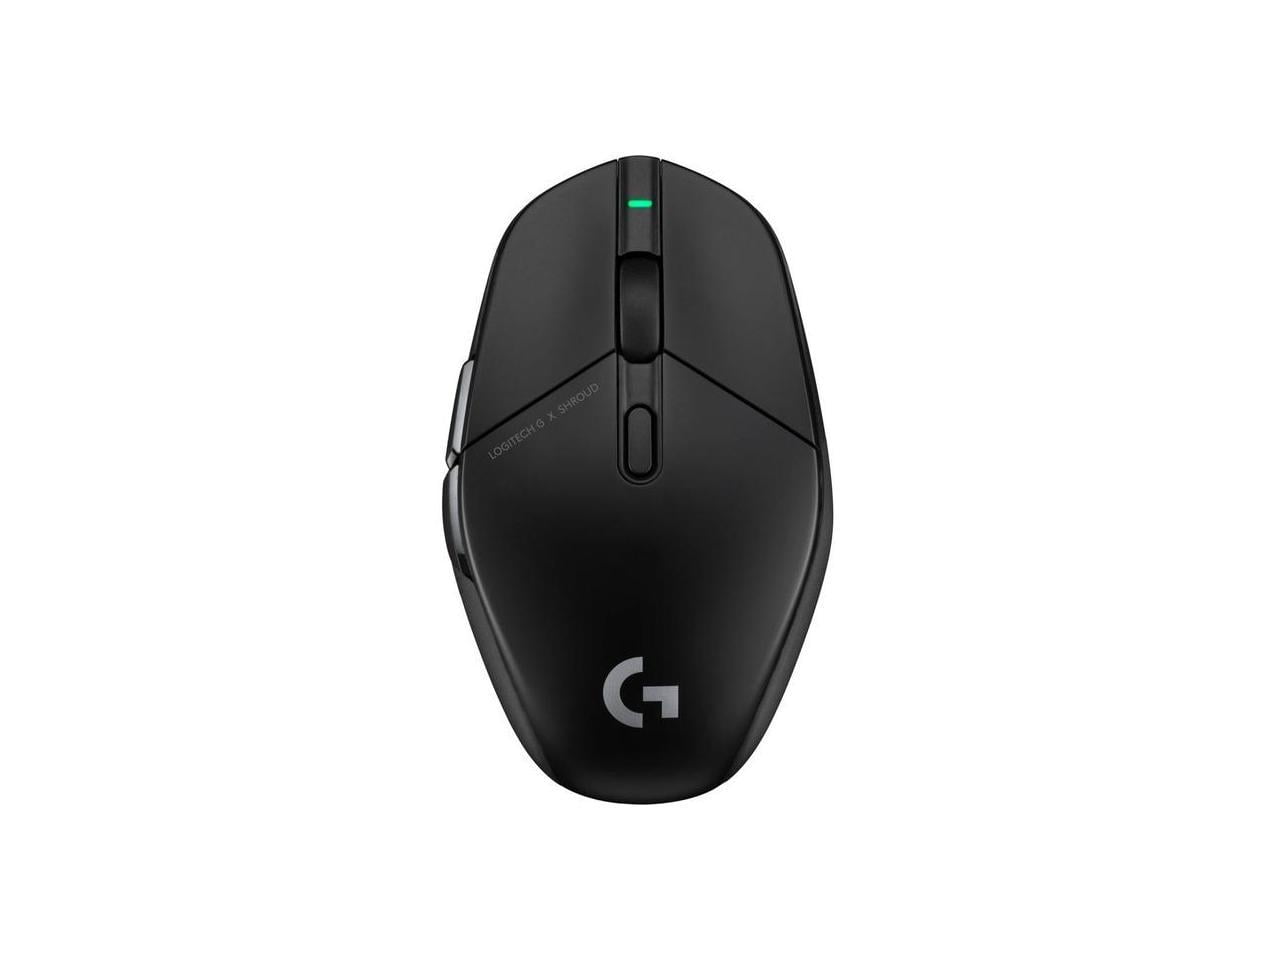 Logitech Shroud Edition Wireless Gaming Mouse - LIGHTSPEED - HERO 25K - 25,600 DPI - 75 grams - – PC - Black - Walmart.com